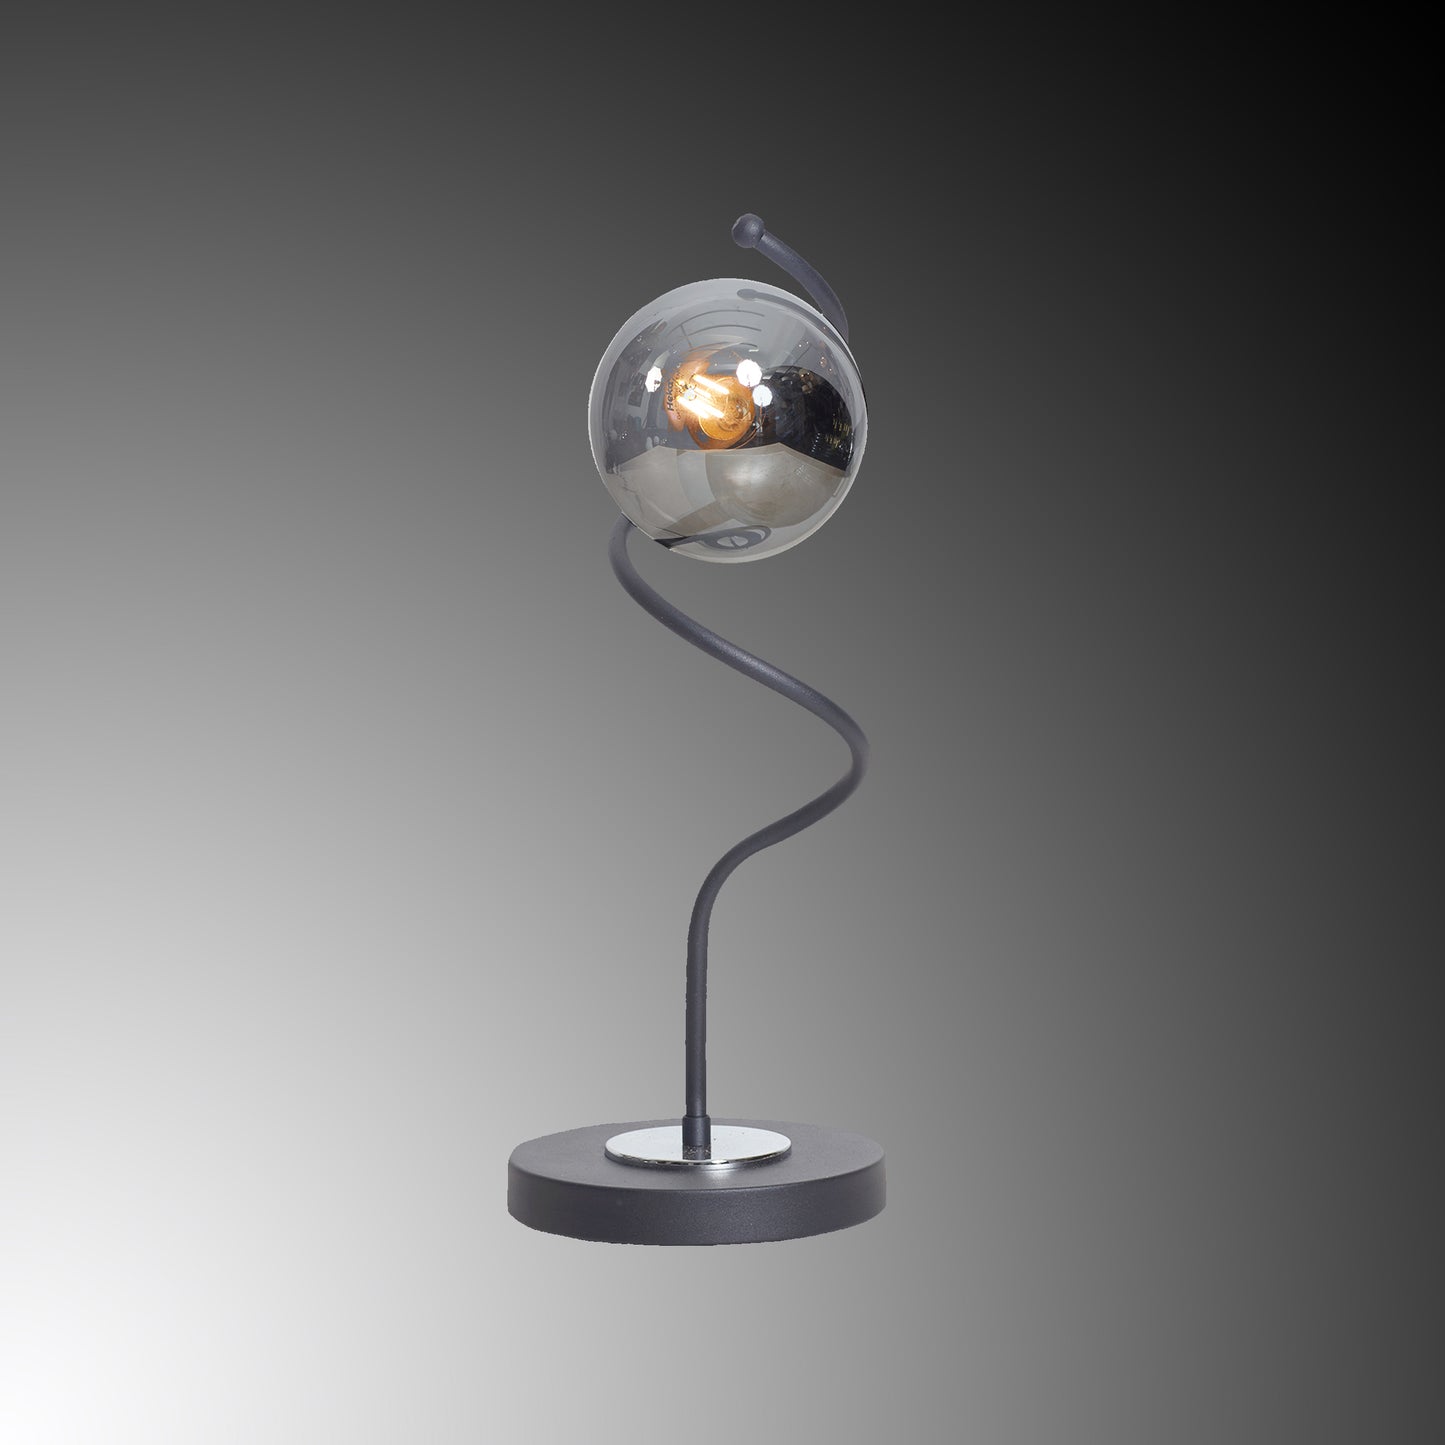 Luzarana Nora black gold luxury desk lamp curved modern design table lamp